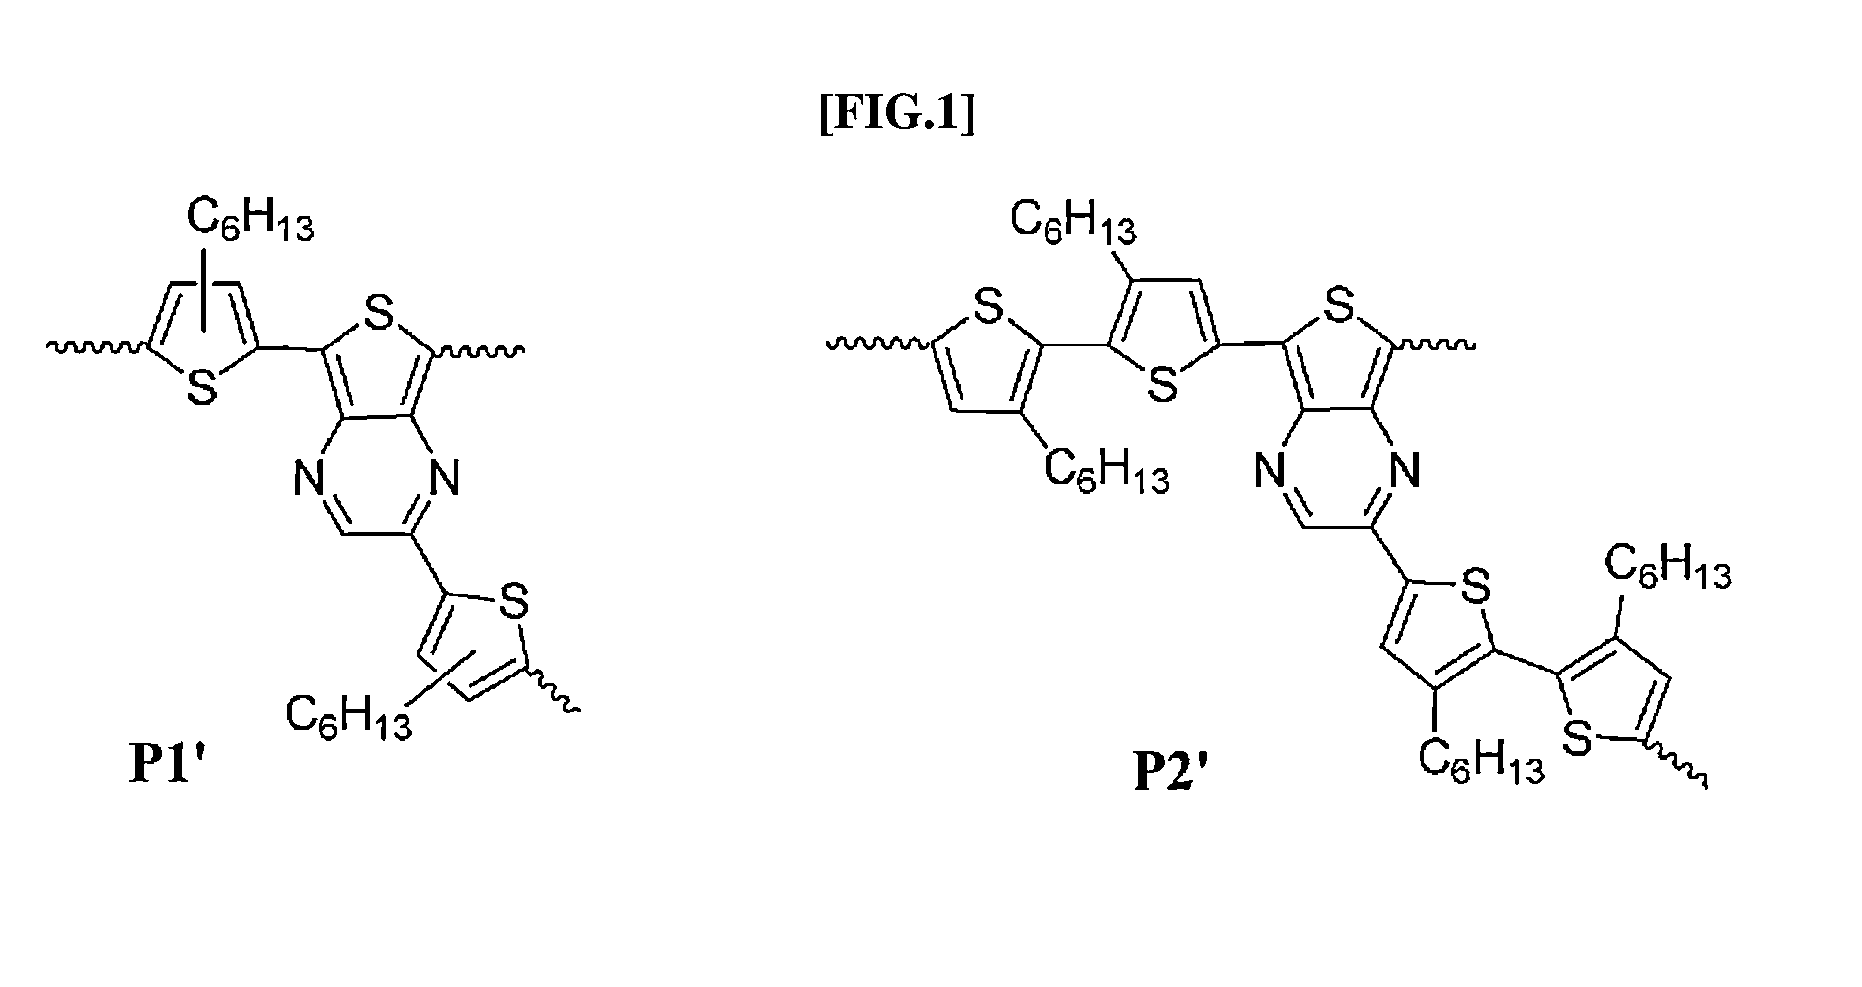 Direct ch arylation method using palladium-based catalyst